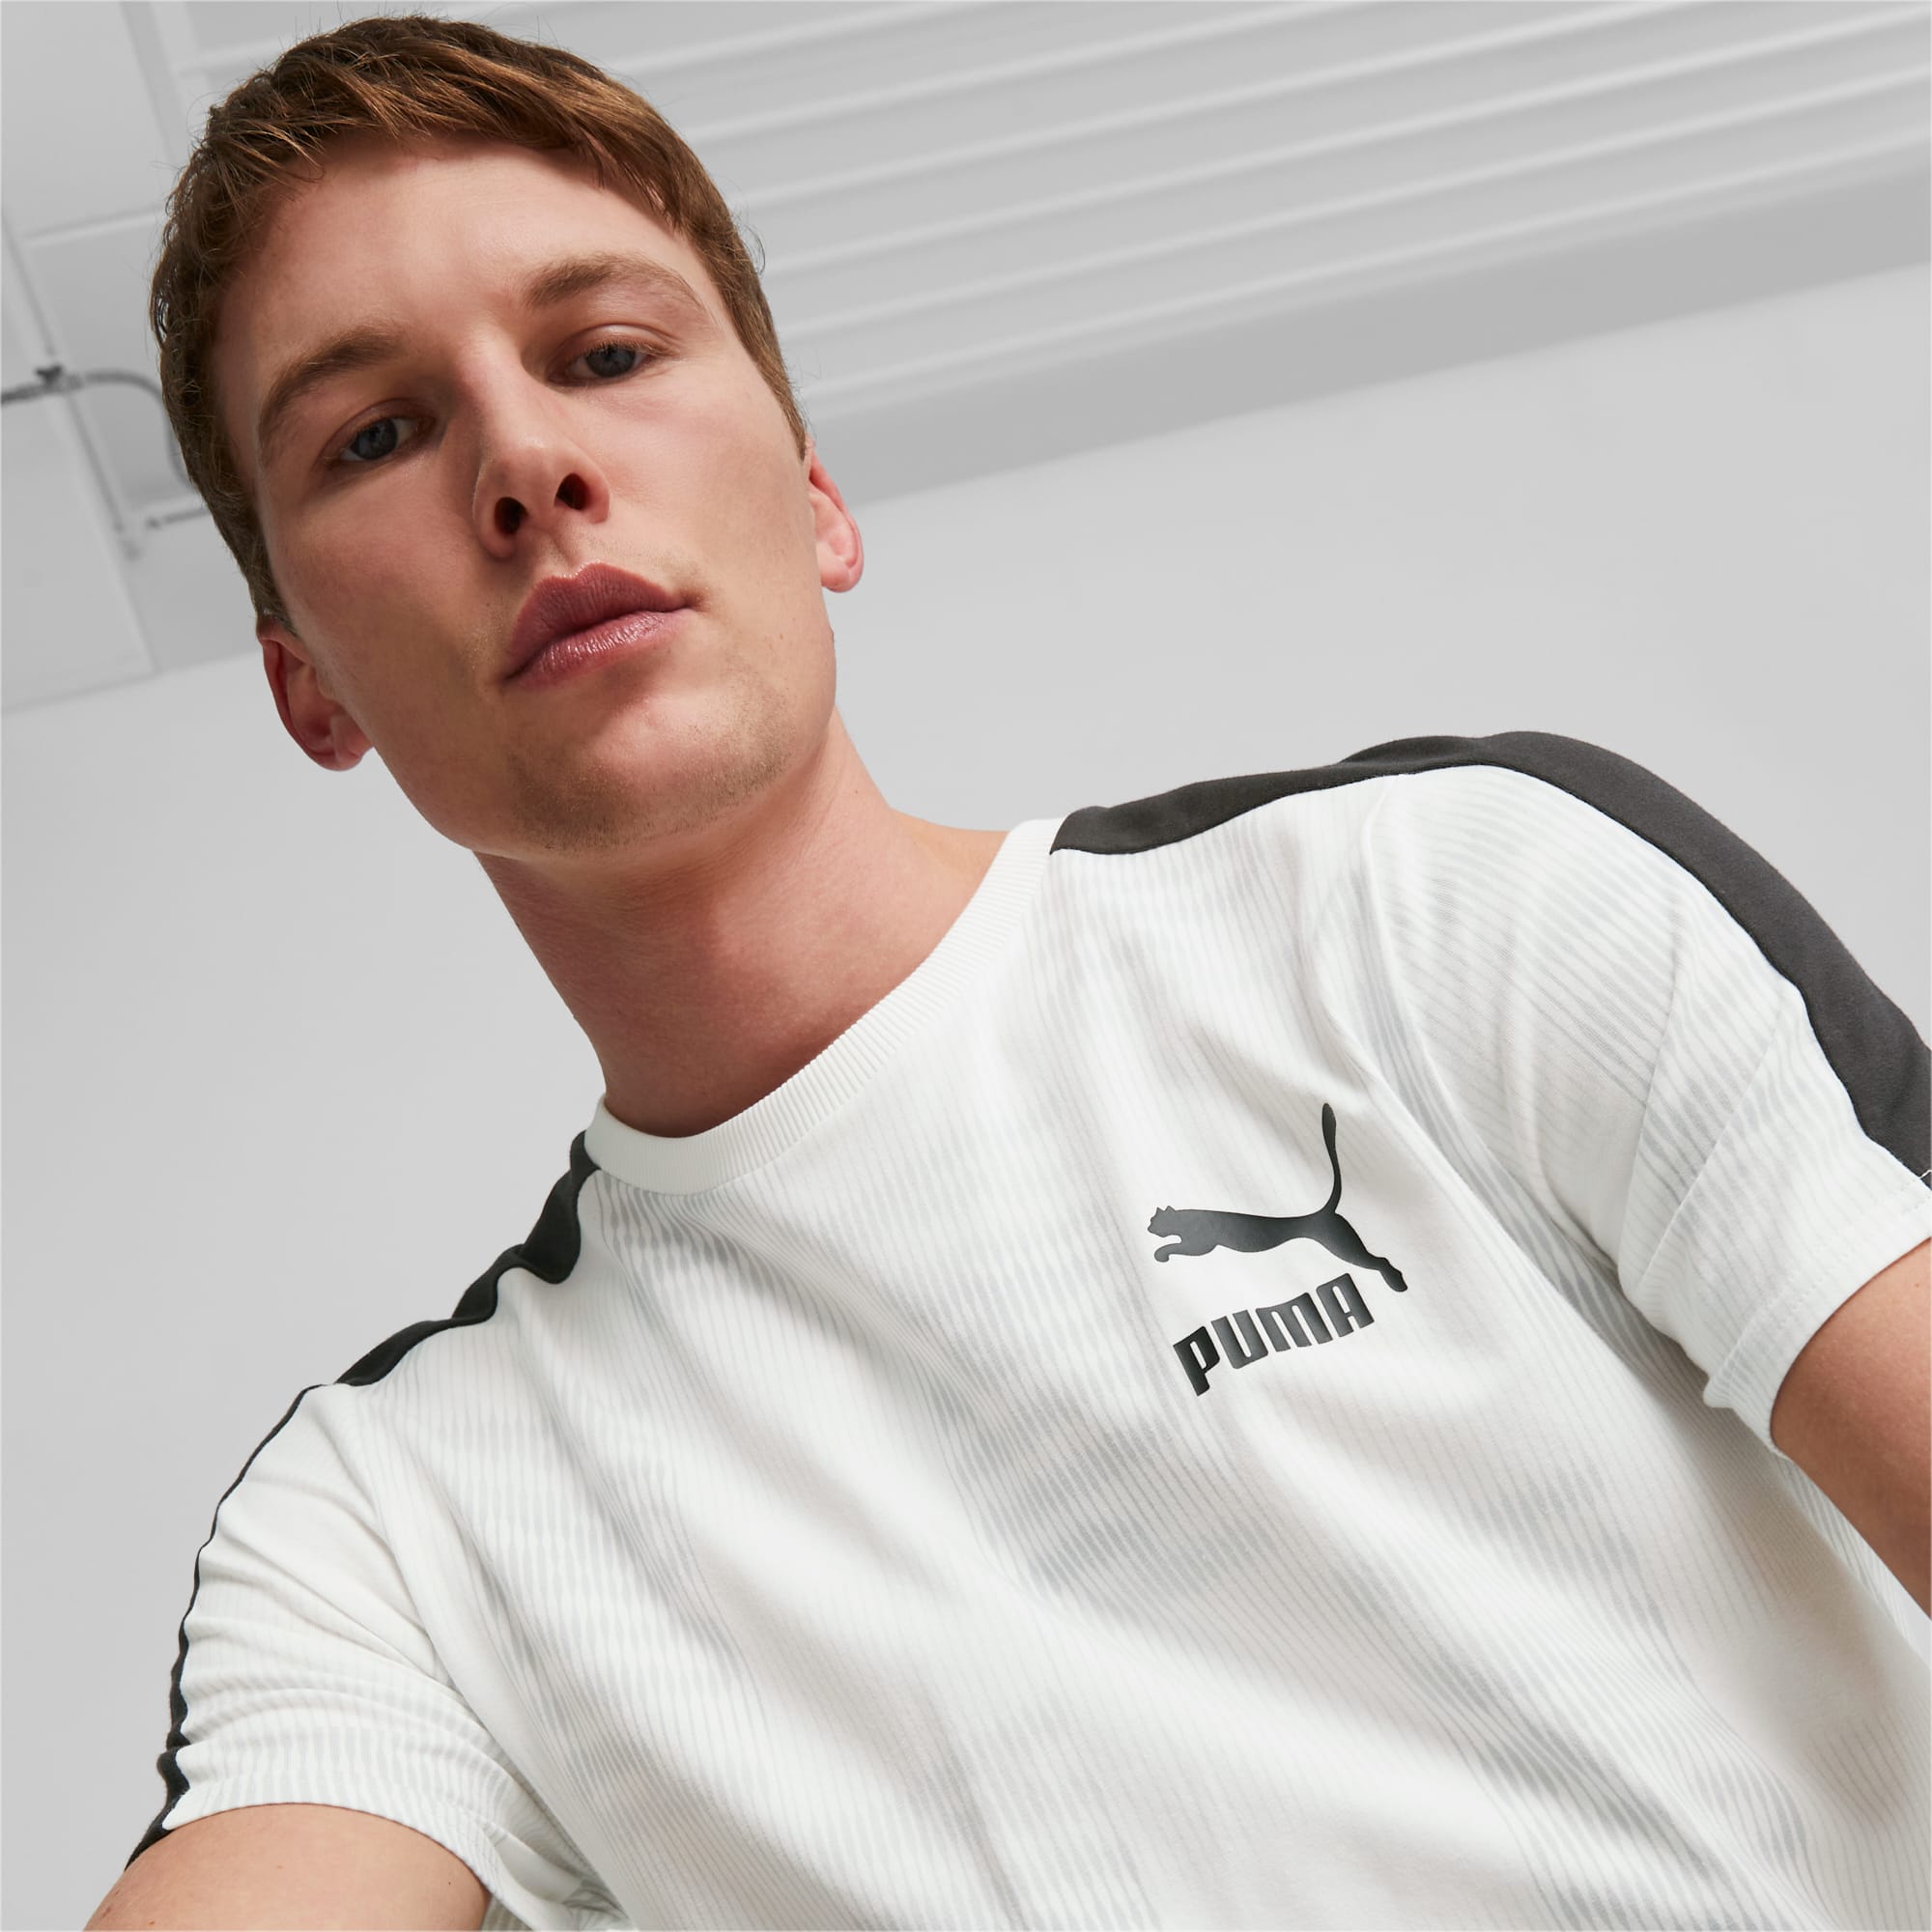 PUMA T7 Sport T-Shirt Men, White/AOP, Size XS, Clothing